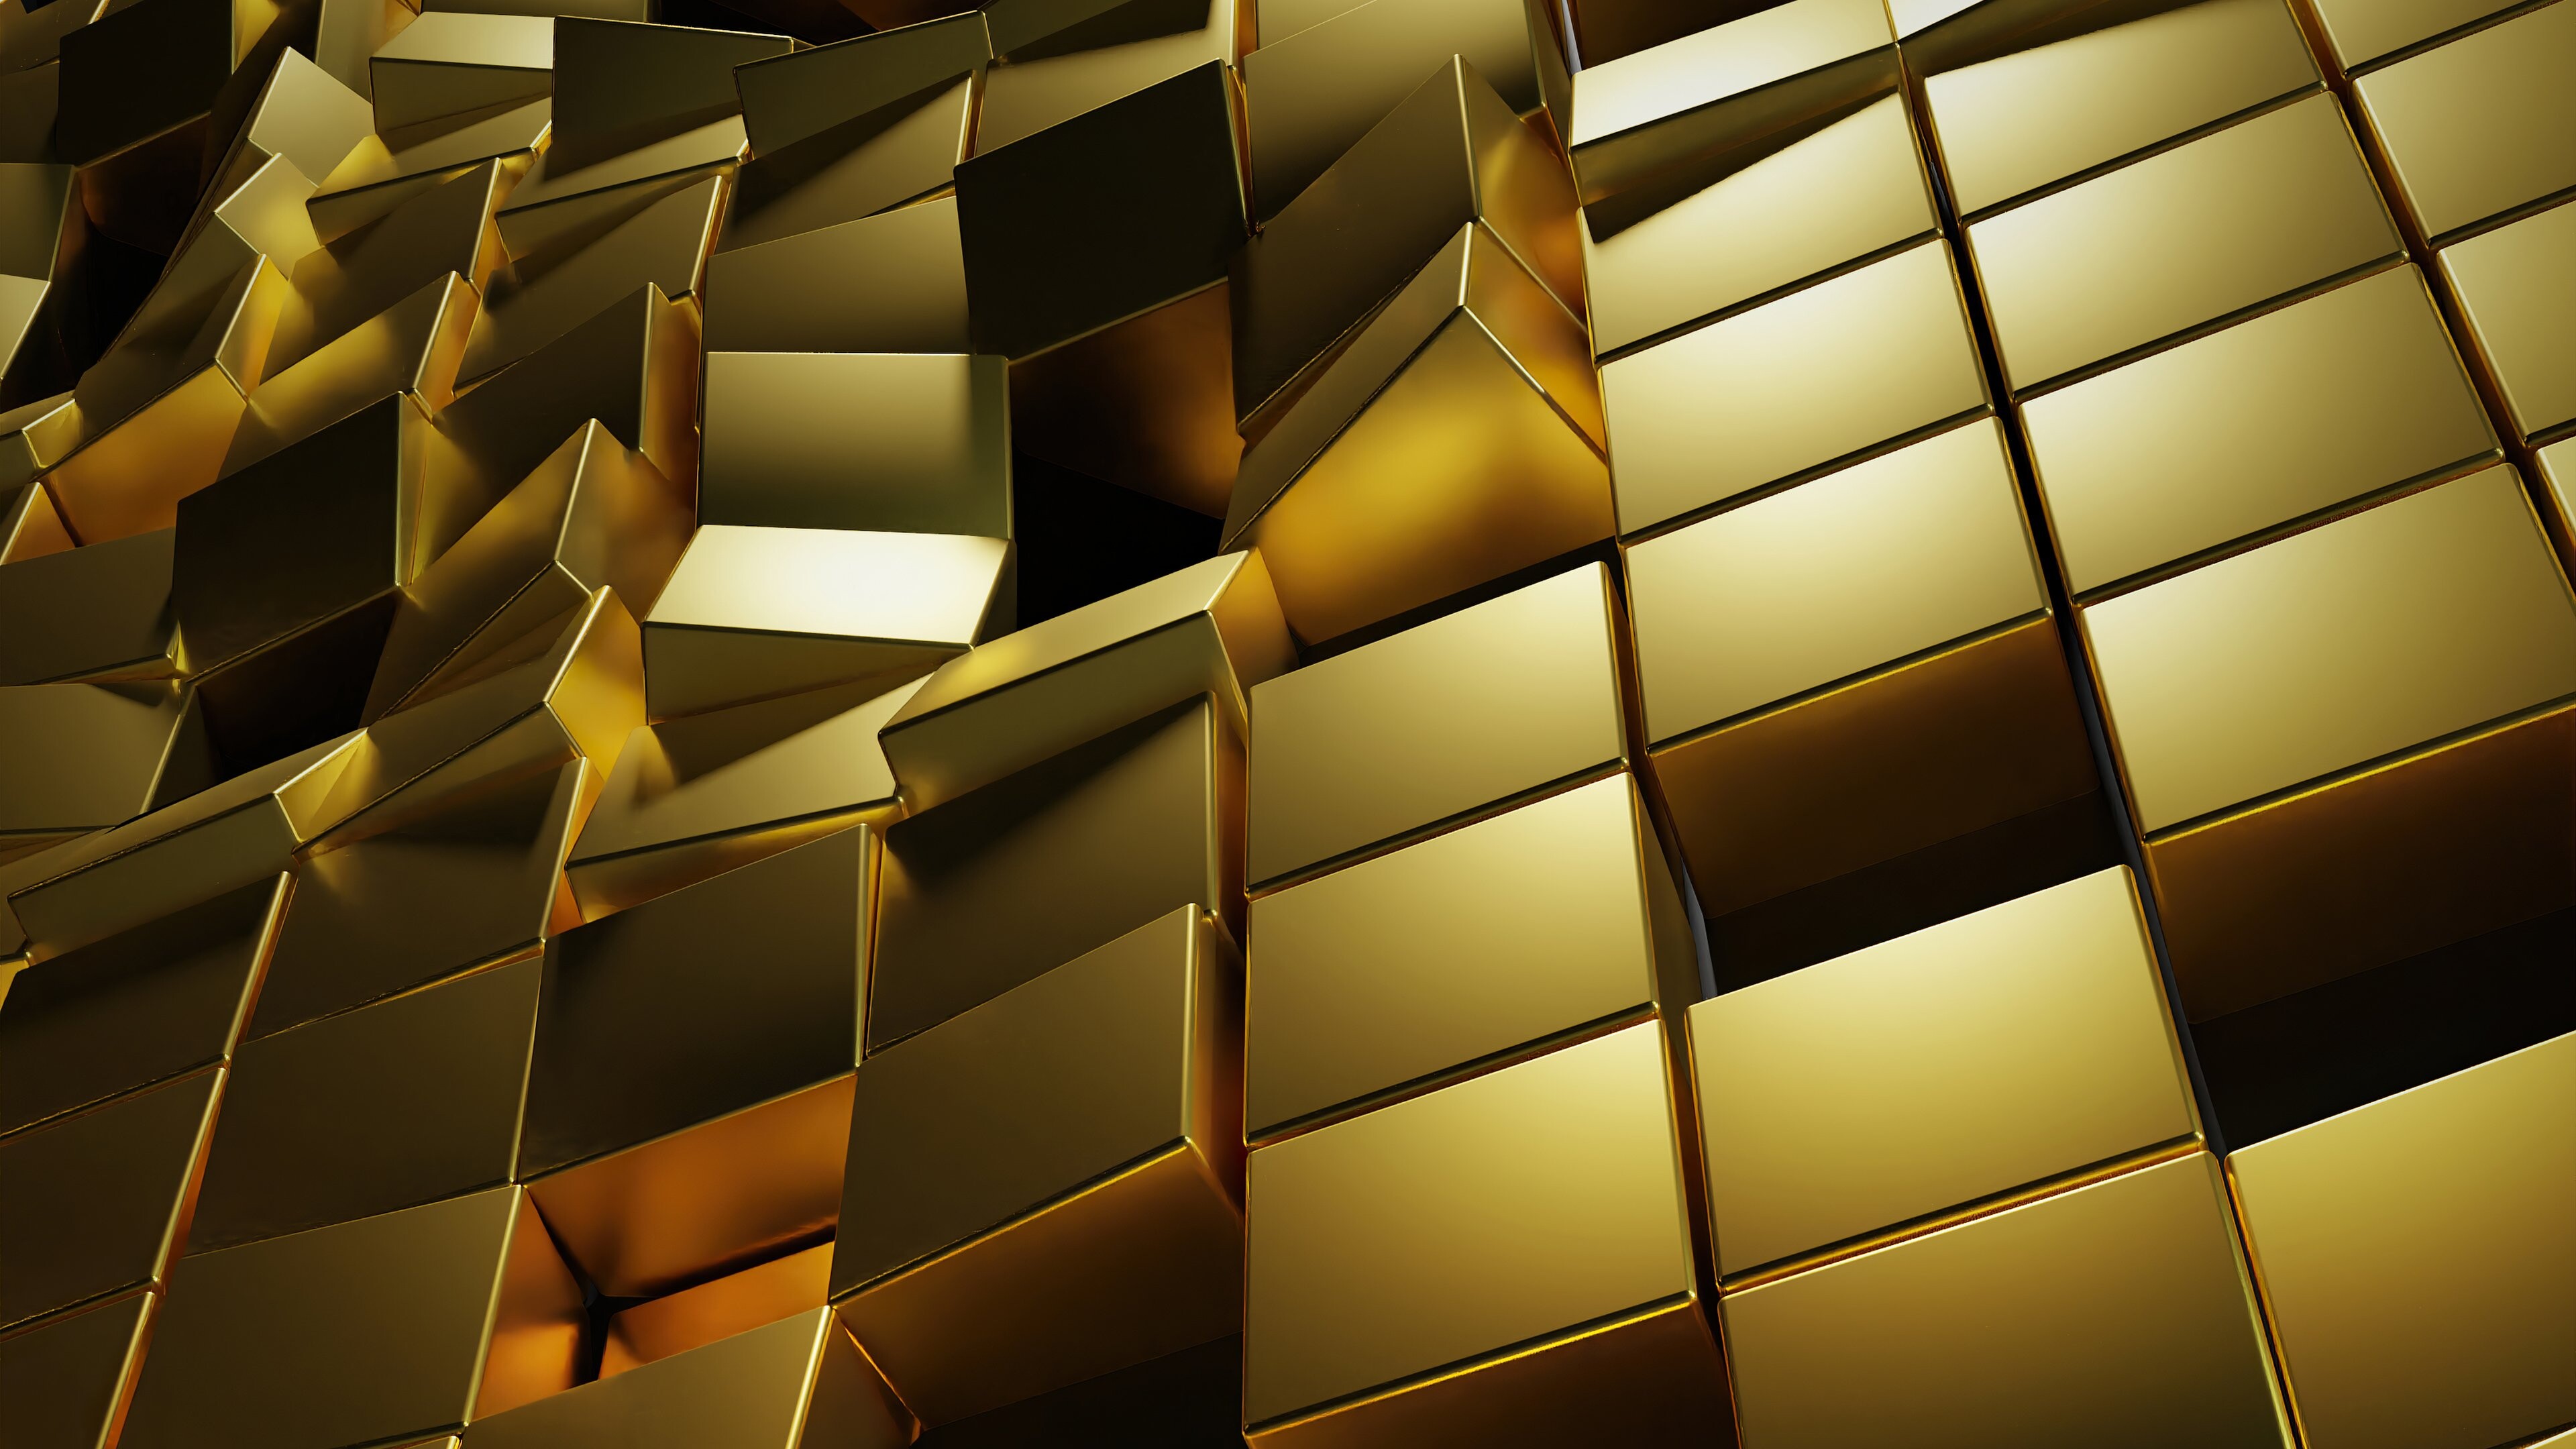 Gold: Pile of gold bars, Symmetry, Money storage, Rectangular blocks, Geometric shapes. 3840x2160 4K Background.